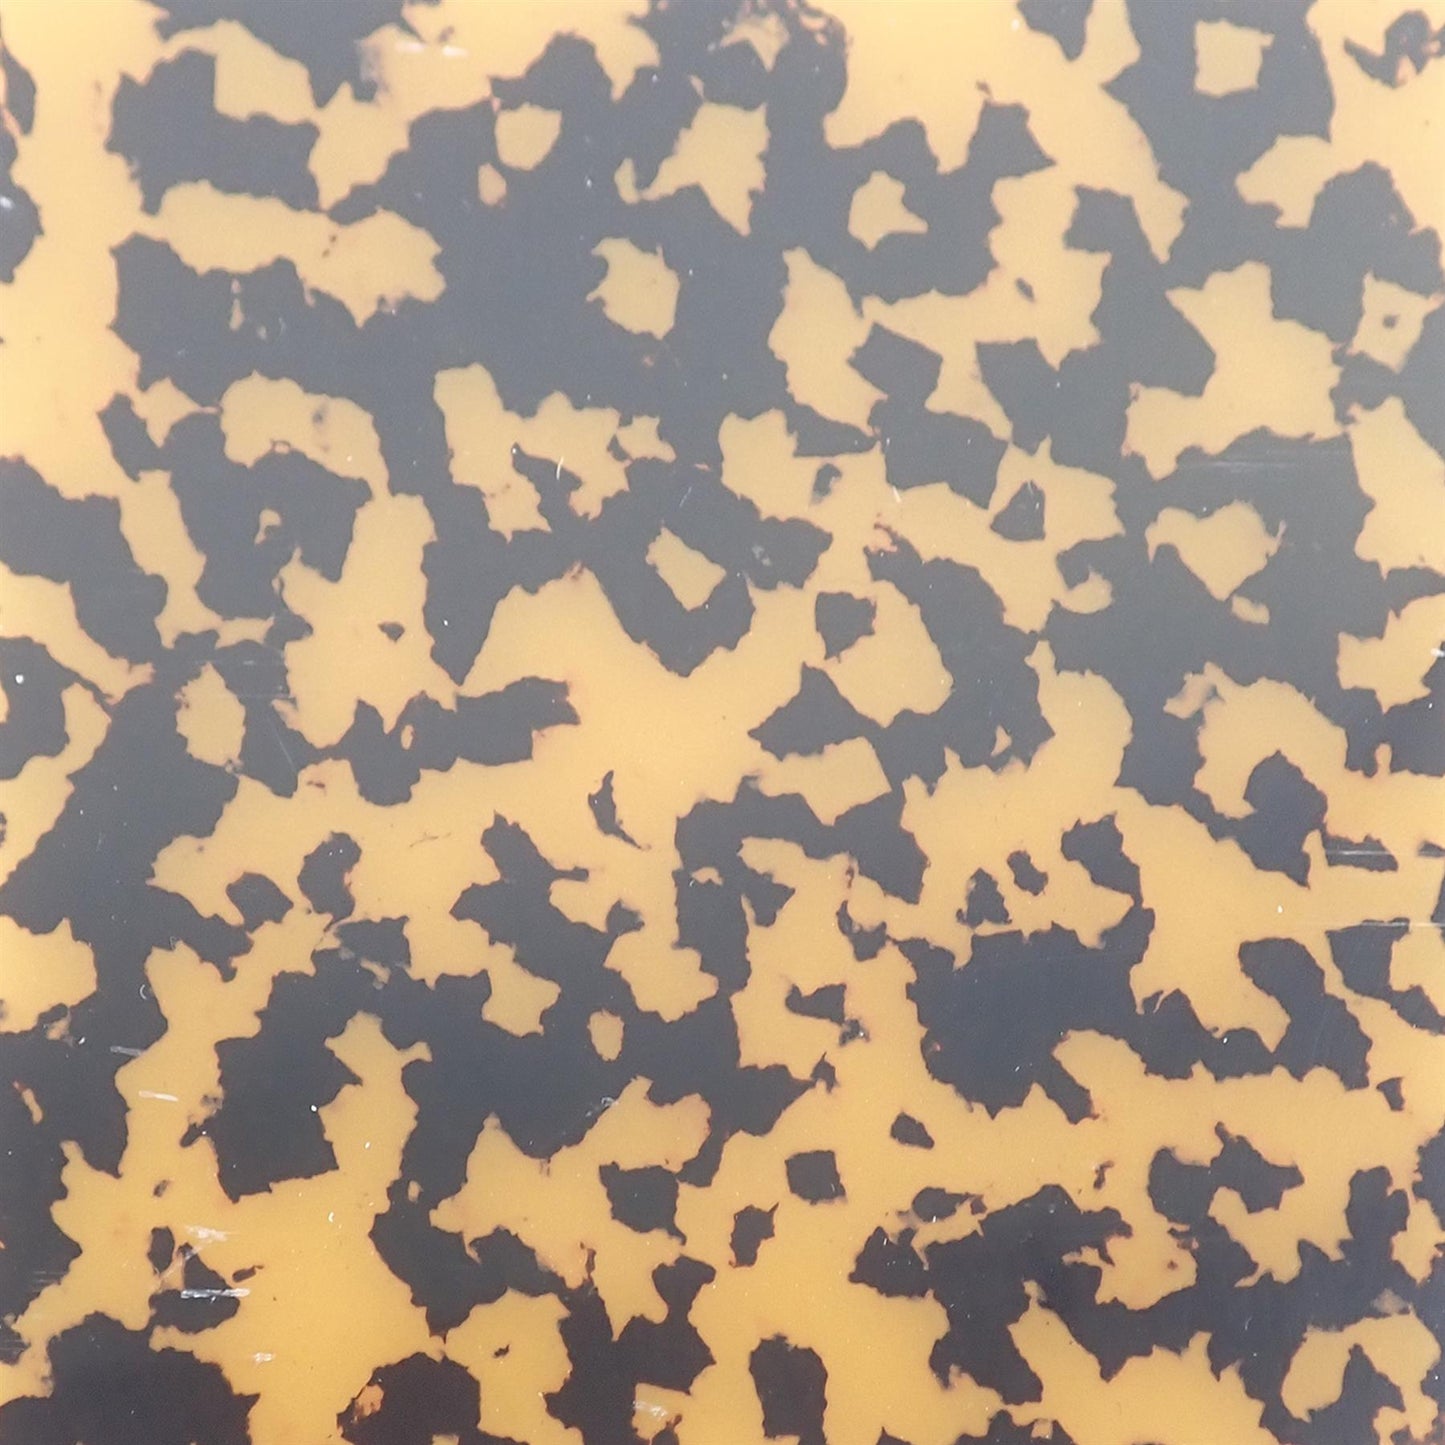 Incudo Dark Spotted Tortoiseshell Celluloid Laminate Acrylic Sheet - 300x200x3mm (11.8x7.87x0.12")